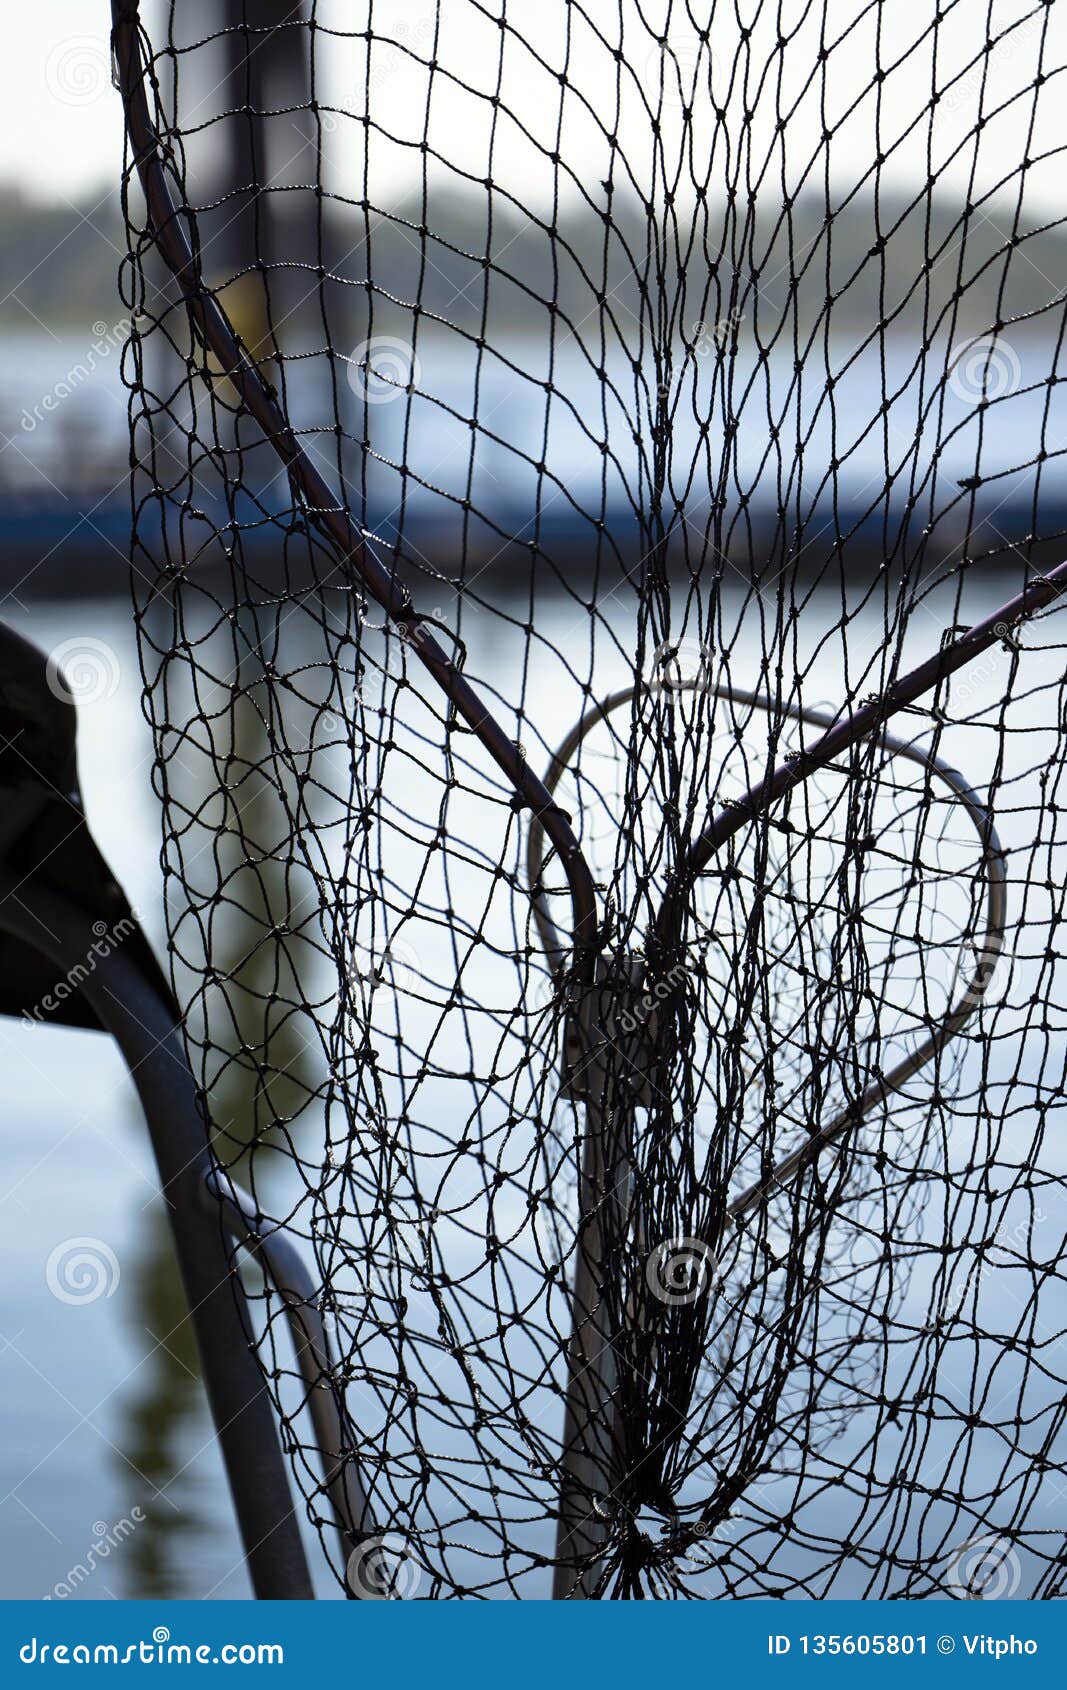 Big and Small Fishing Nets for Hooking Fish Stock Image - Image of berth,  knots: 135605801